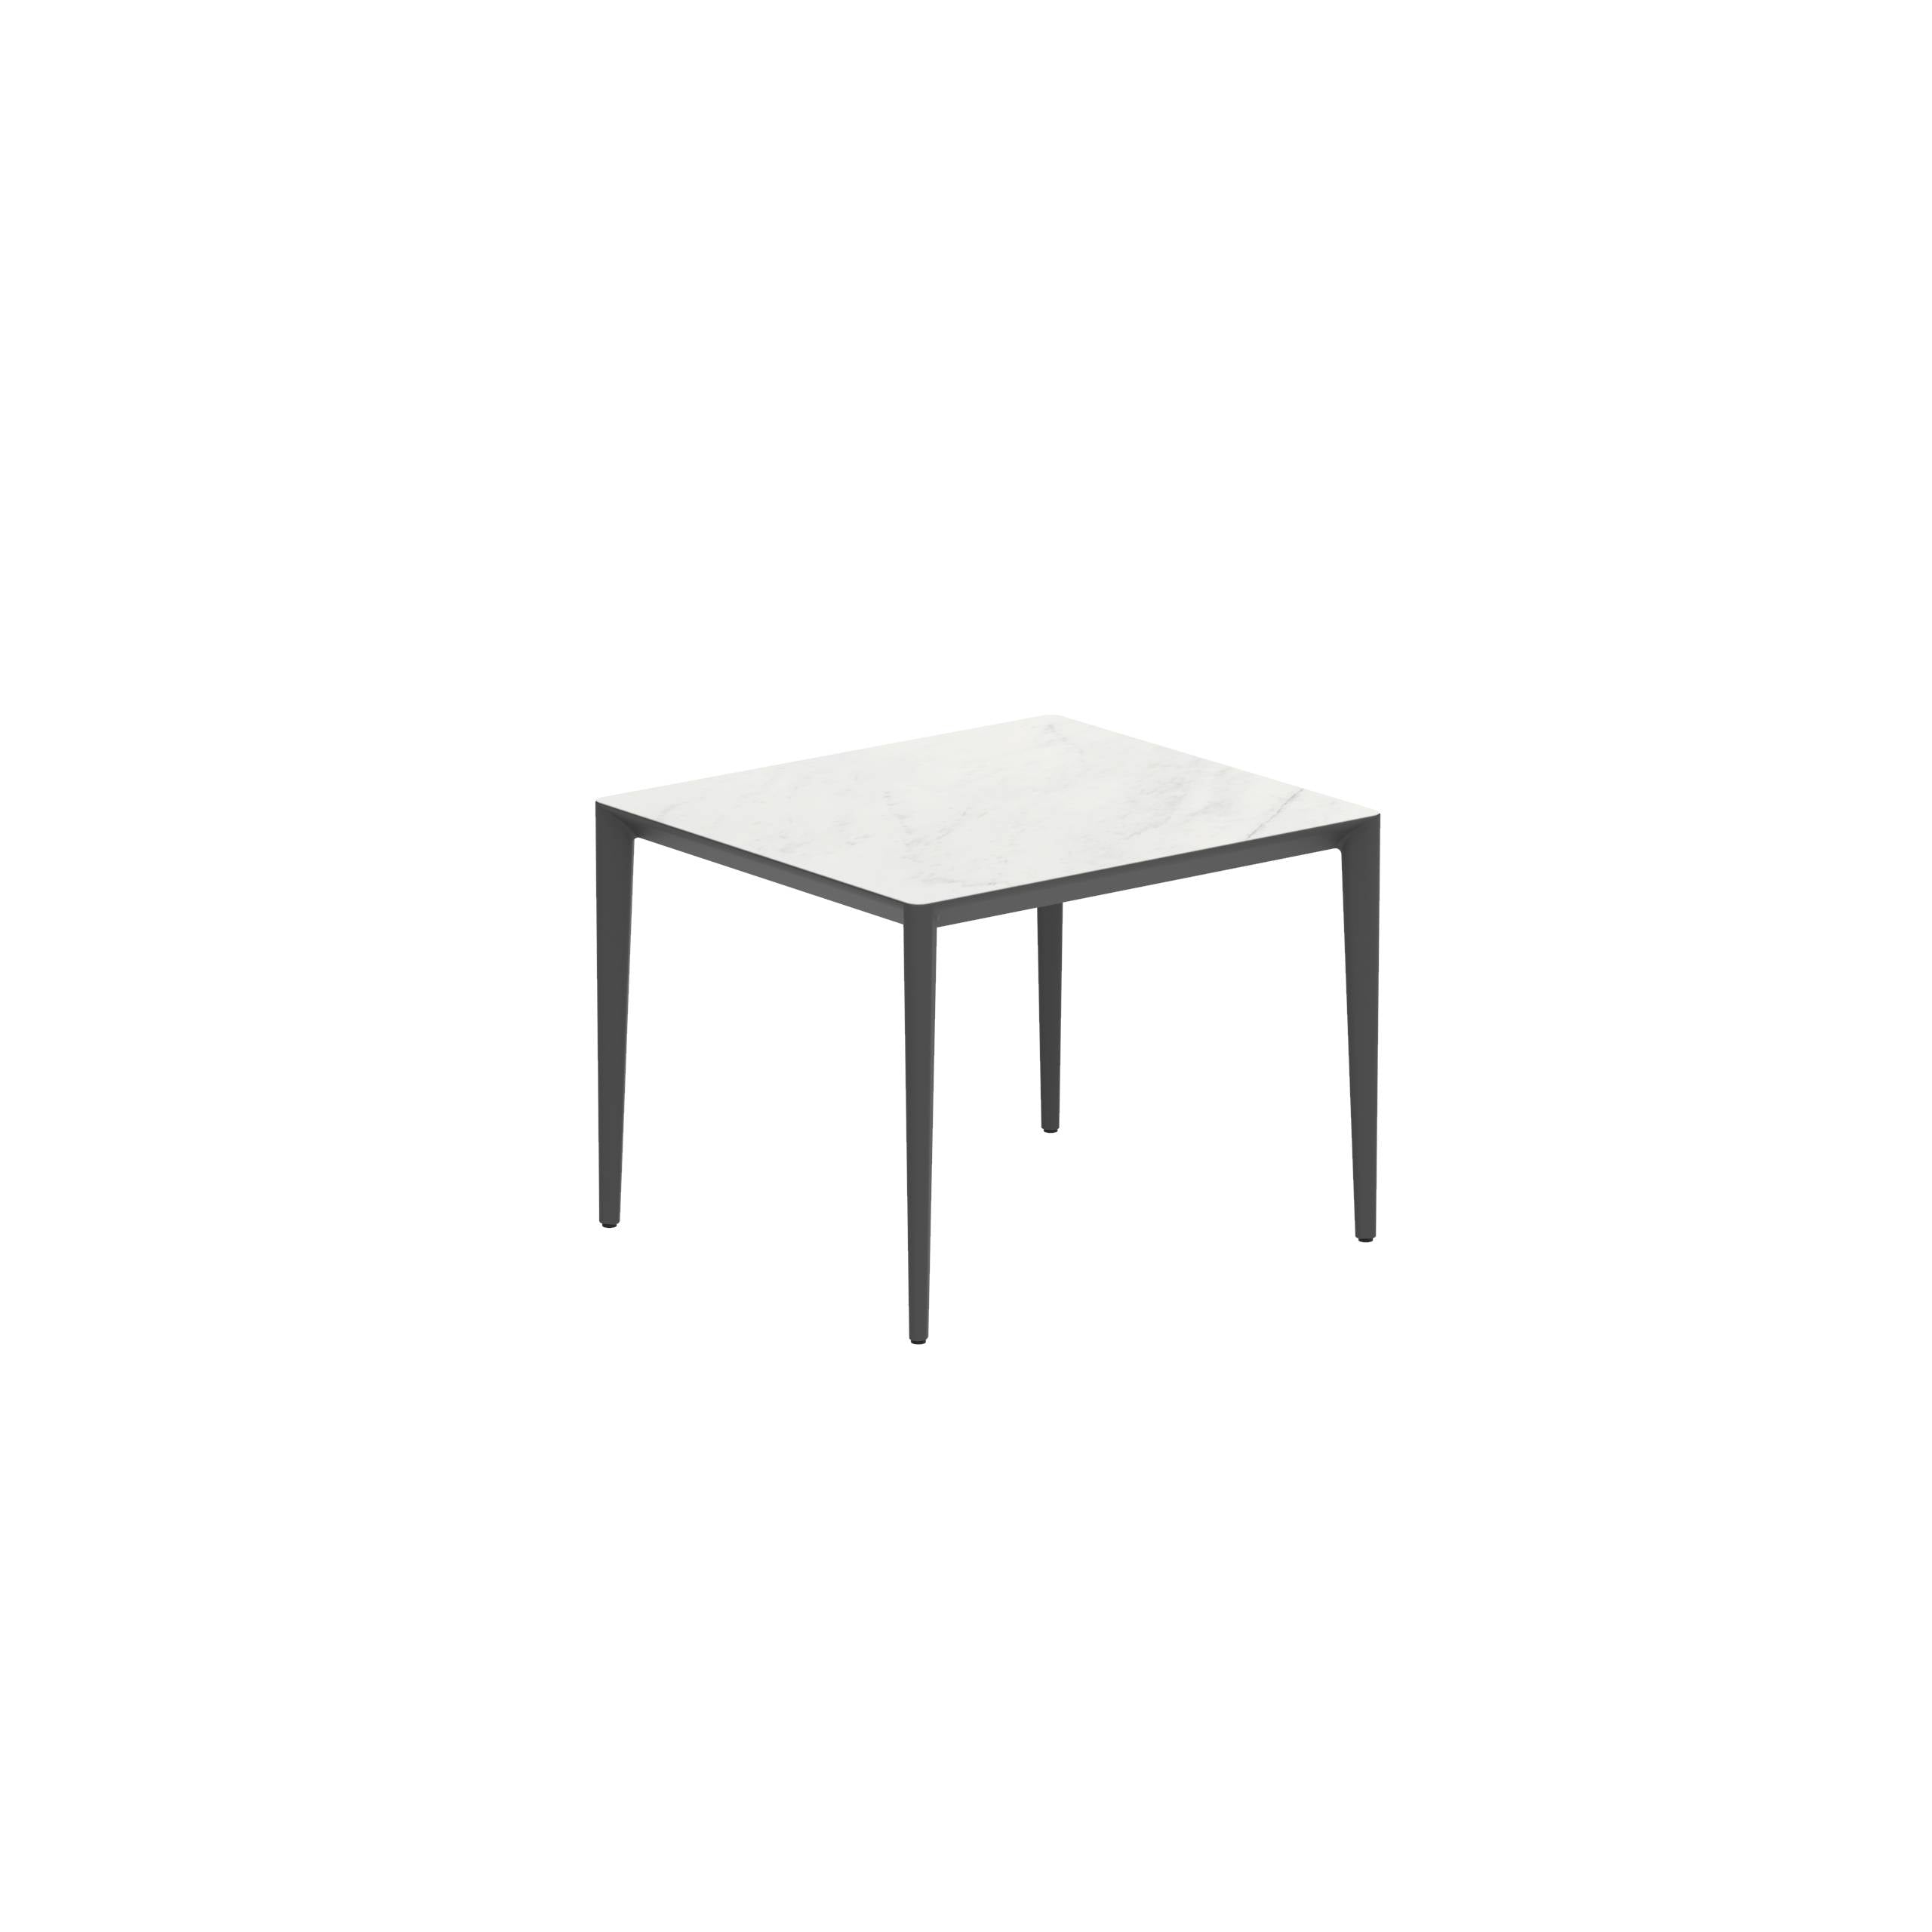 U-Nite Table 100x90cm Anthracite With Ceramic Tabletop In Bianco Statuario